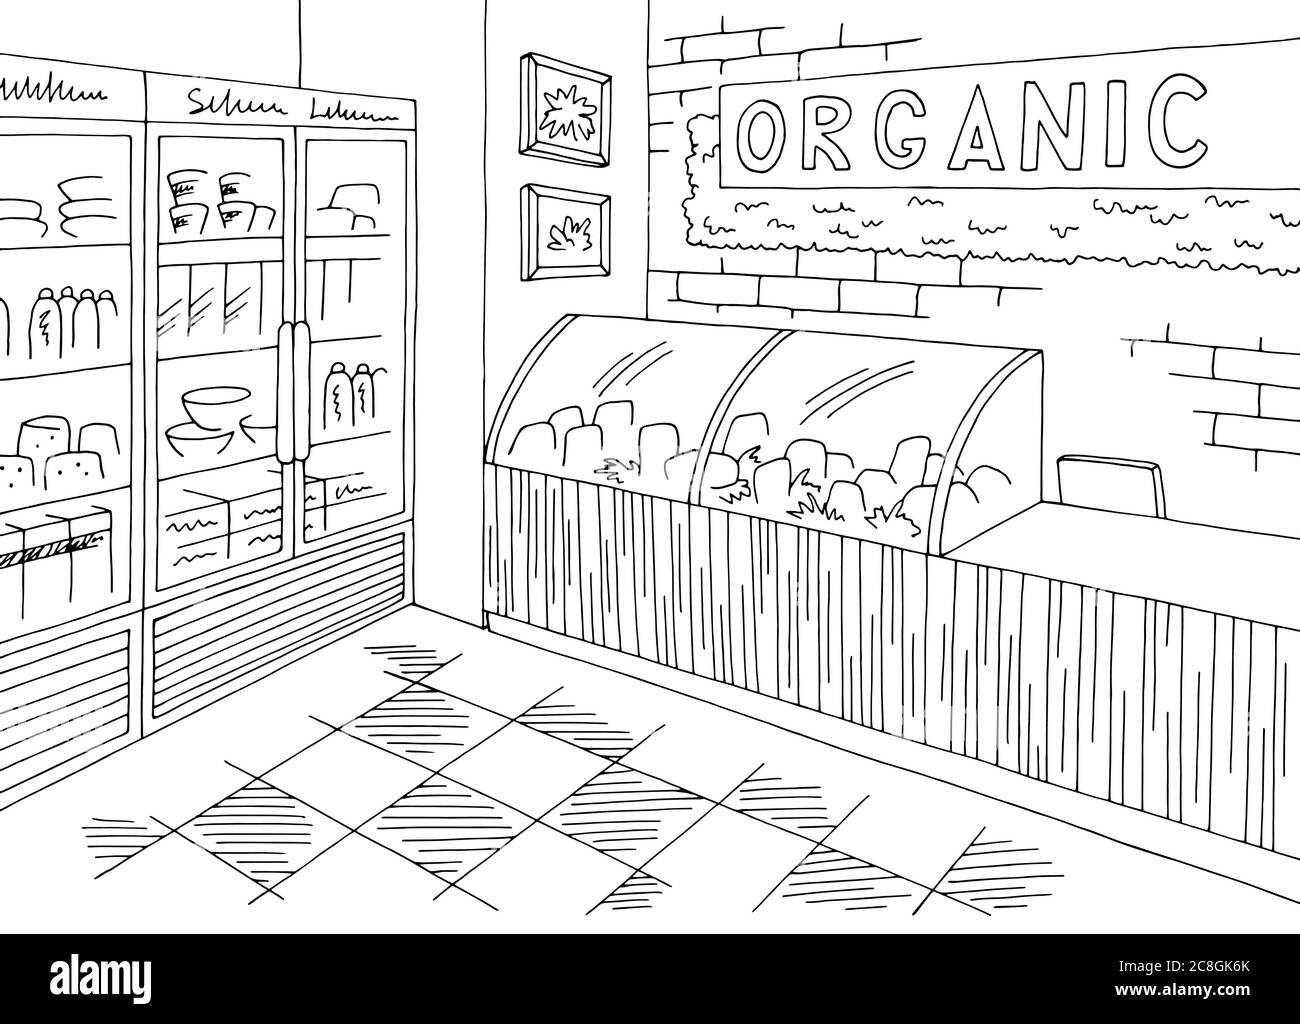 Grocery store organic shop interior black white graphic sketch illustration vector Stock Vector